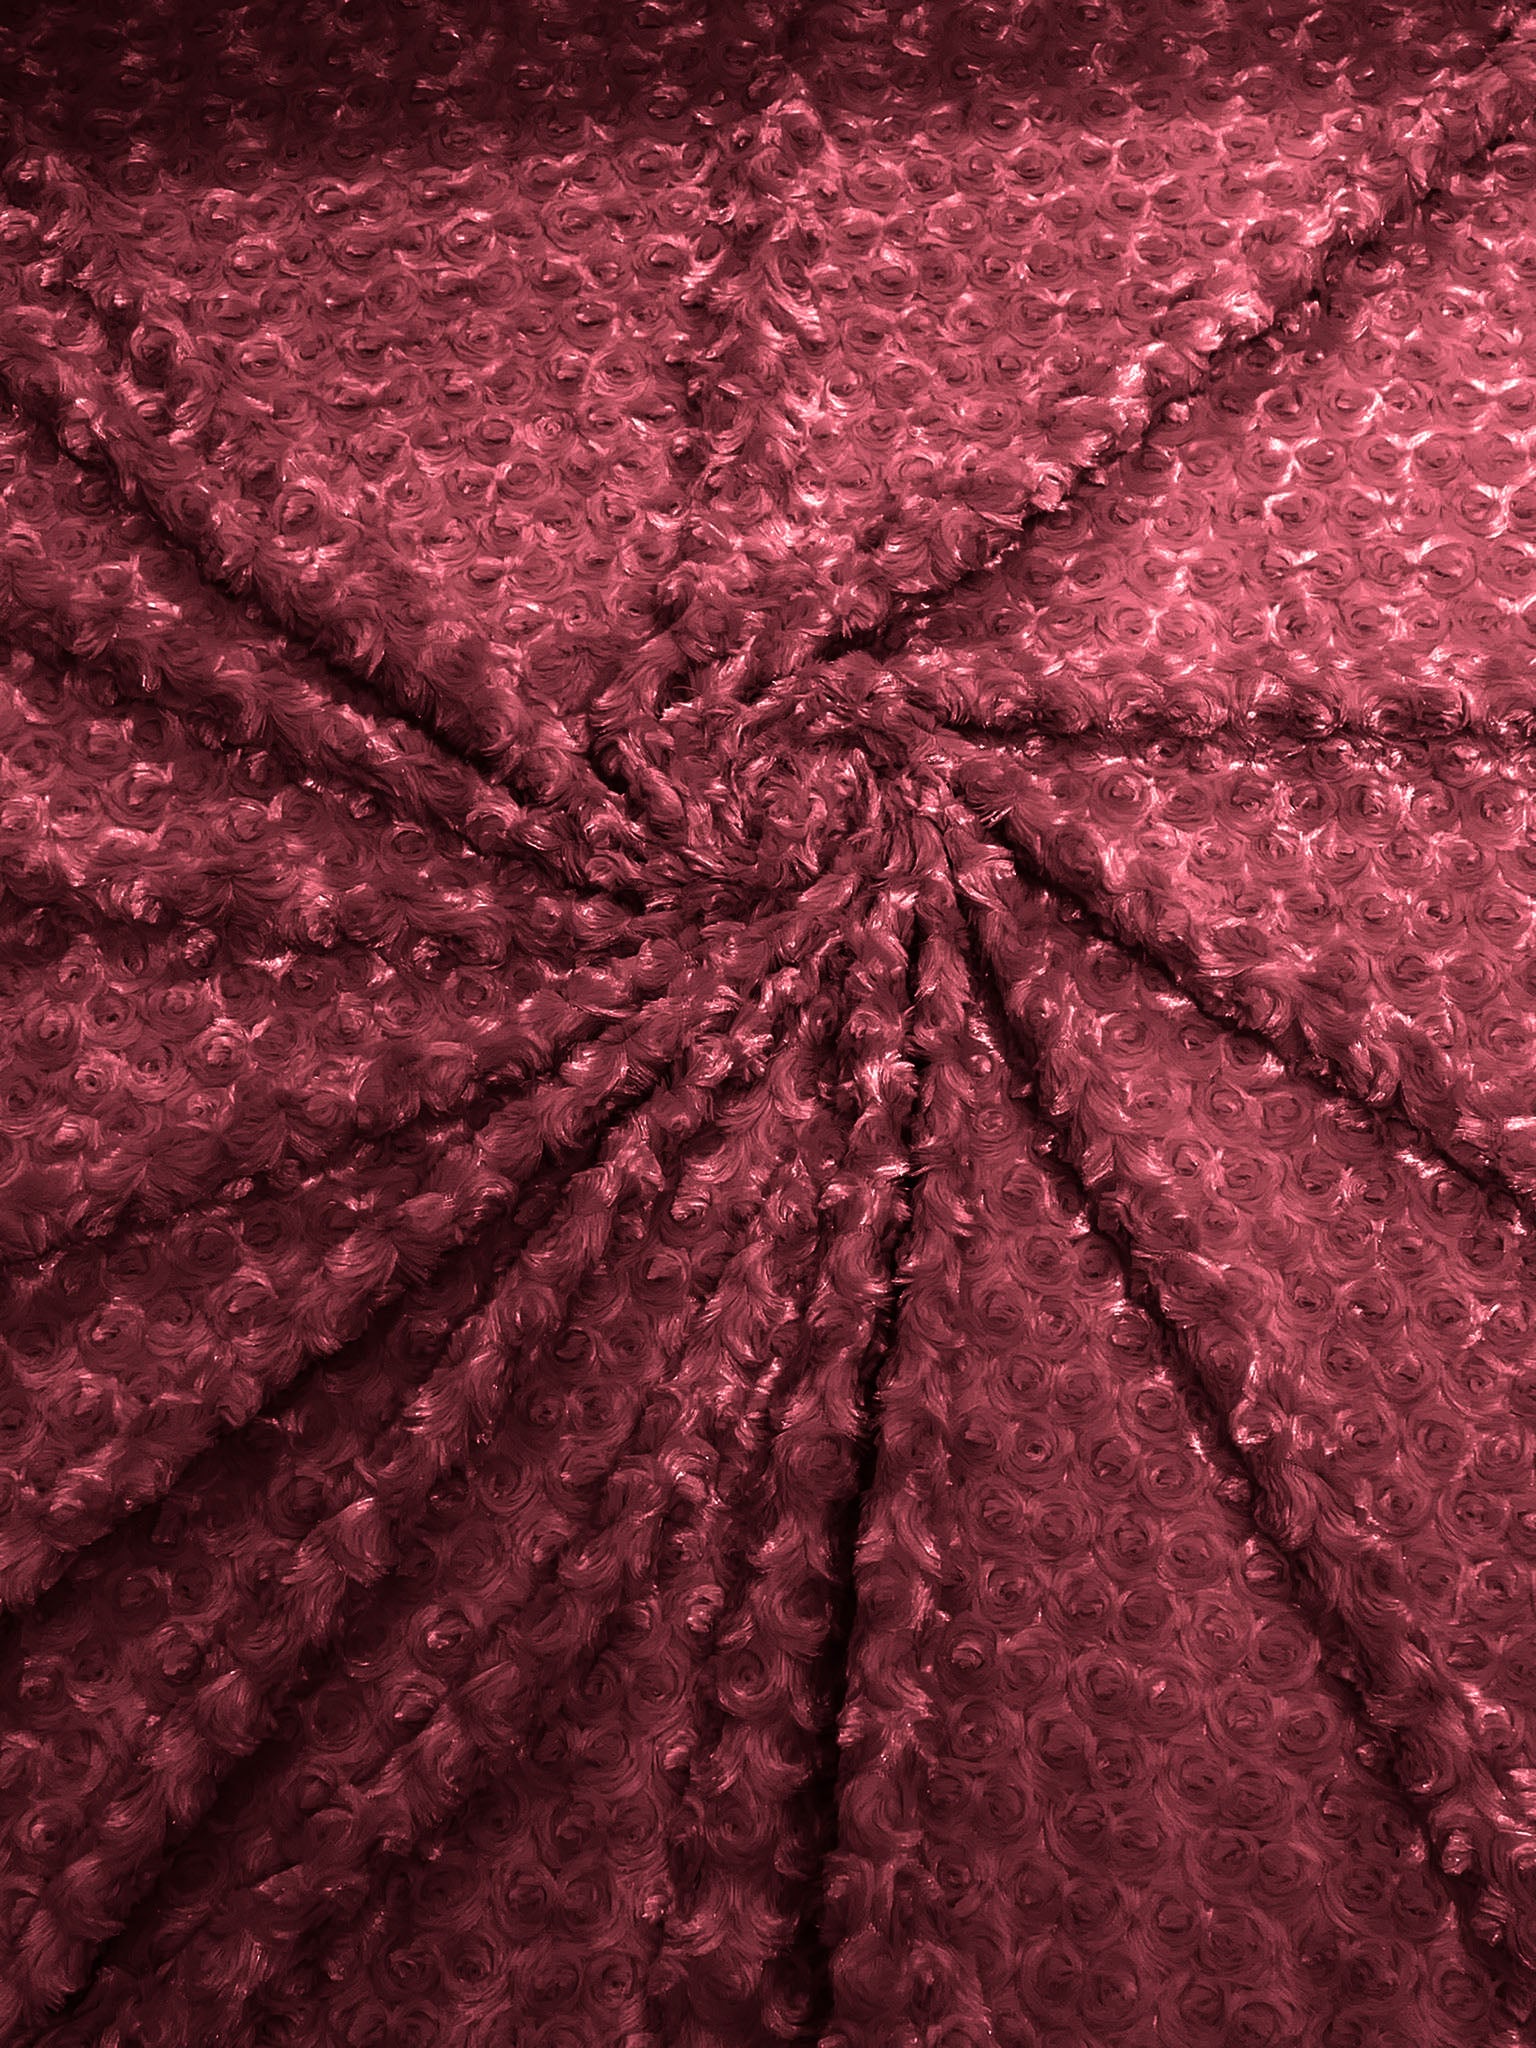 Burgundy - Minky Swirl Rose Blossom Ball Rosebud Plush Fur Fabric Polyester- 58" Wide Sold By The Yard